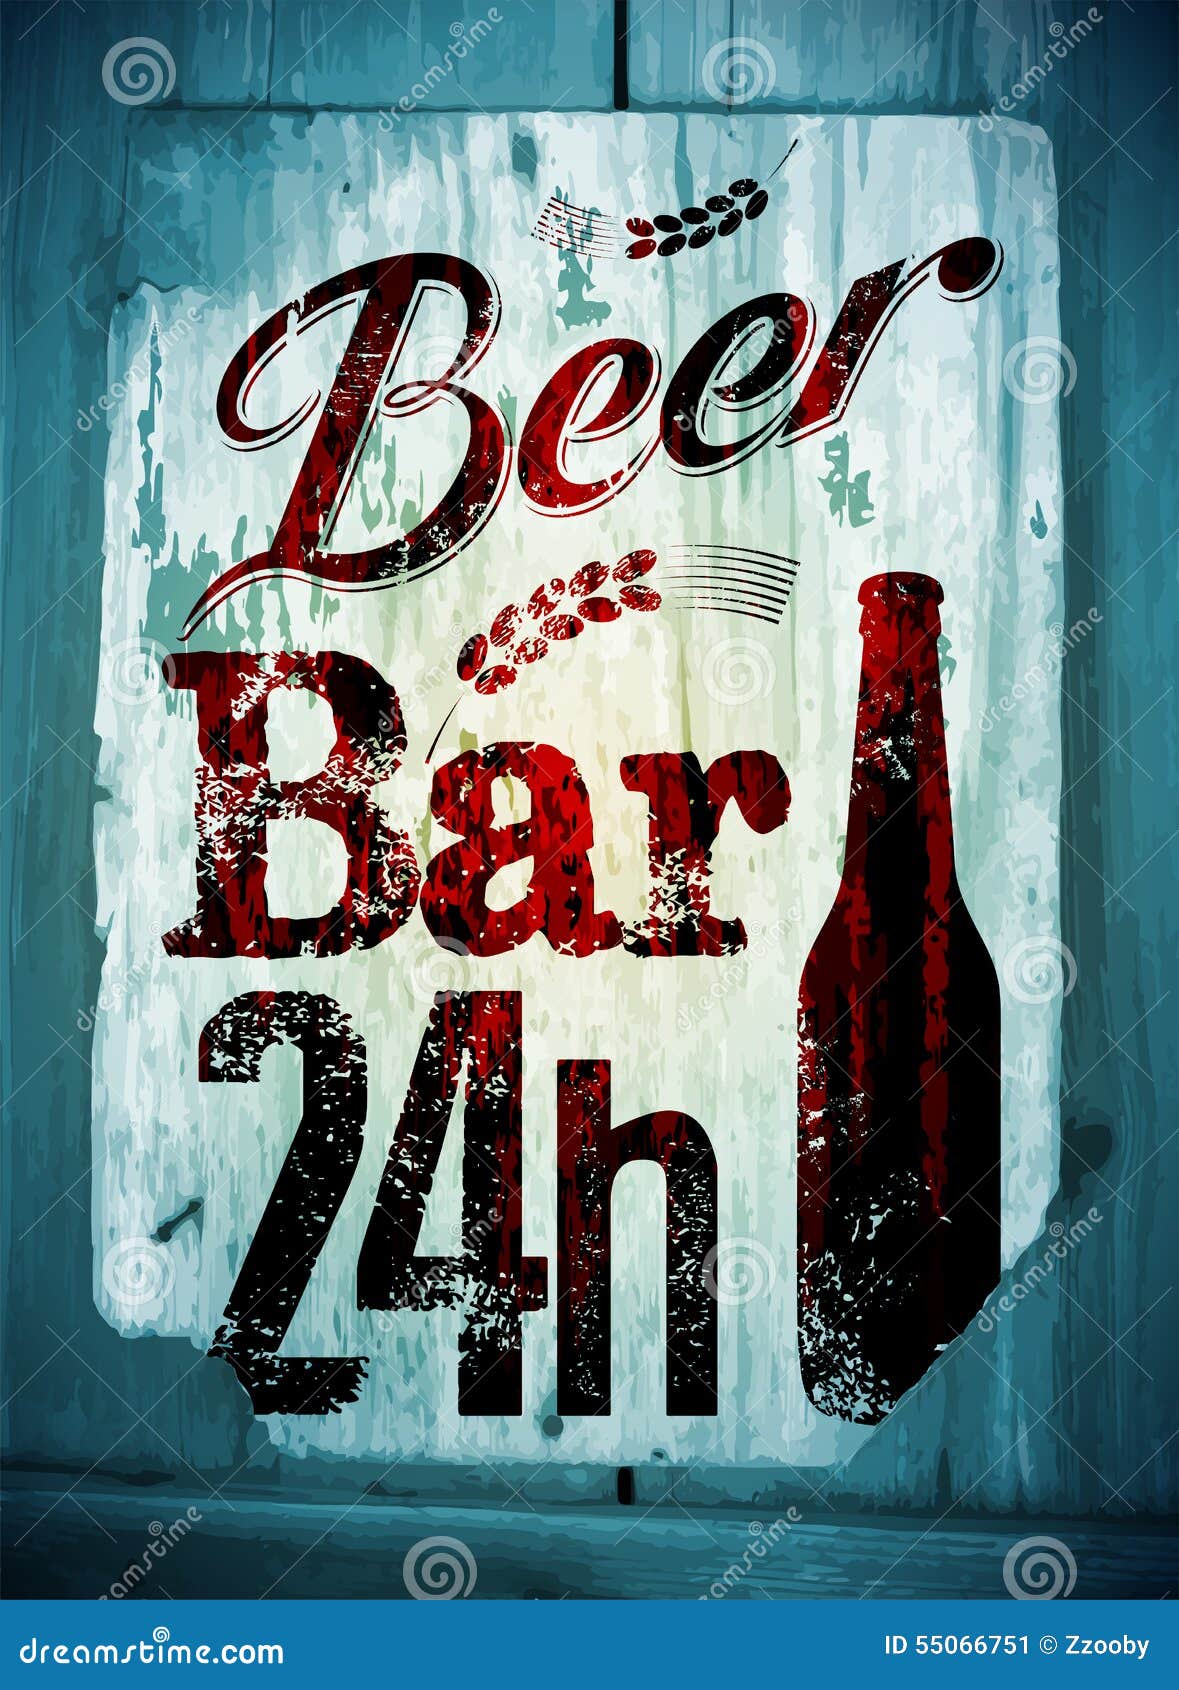 Vintage Grunge Style Beer Bar Poster. Retro Typographical Vector Illustration On Wood Background 